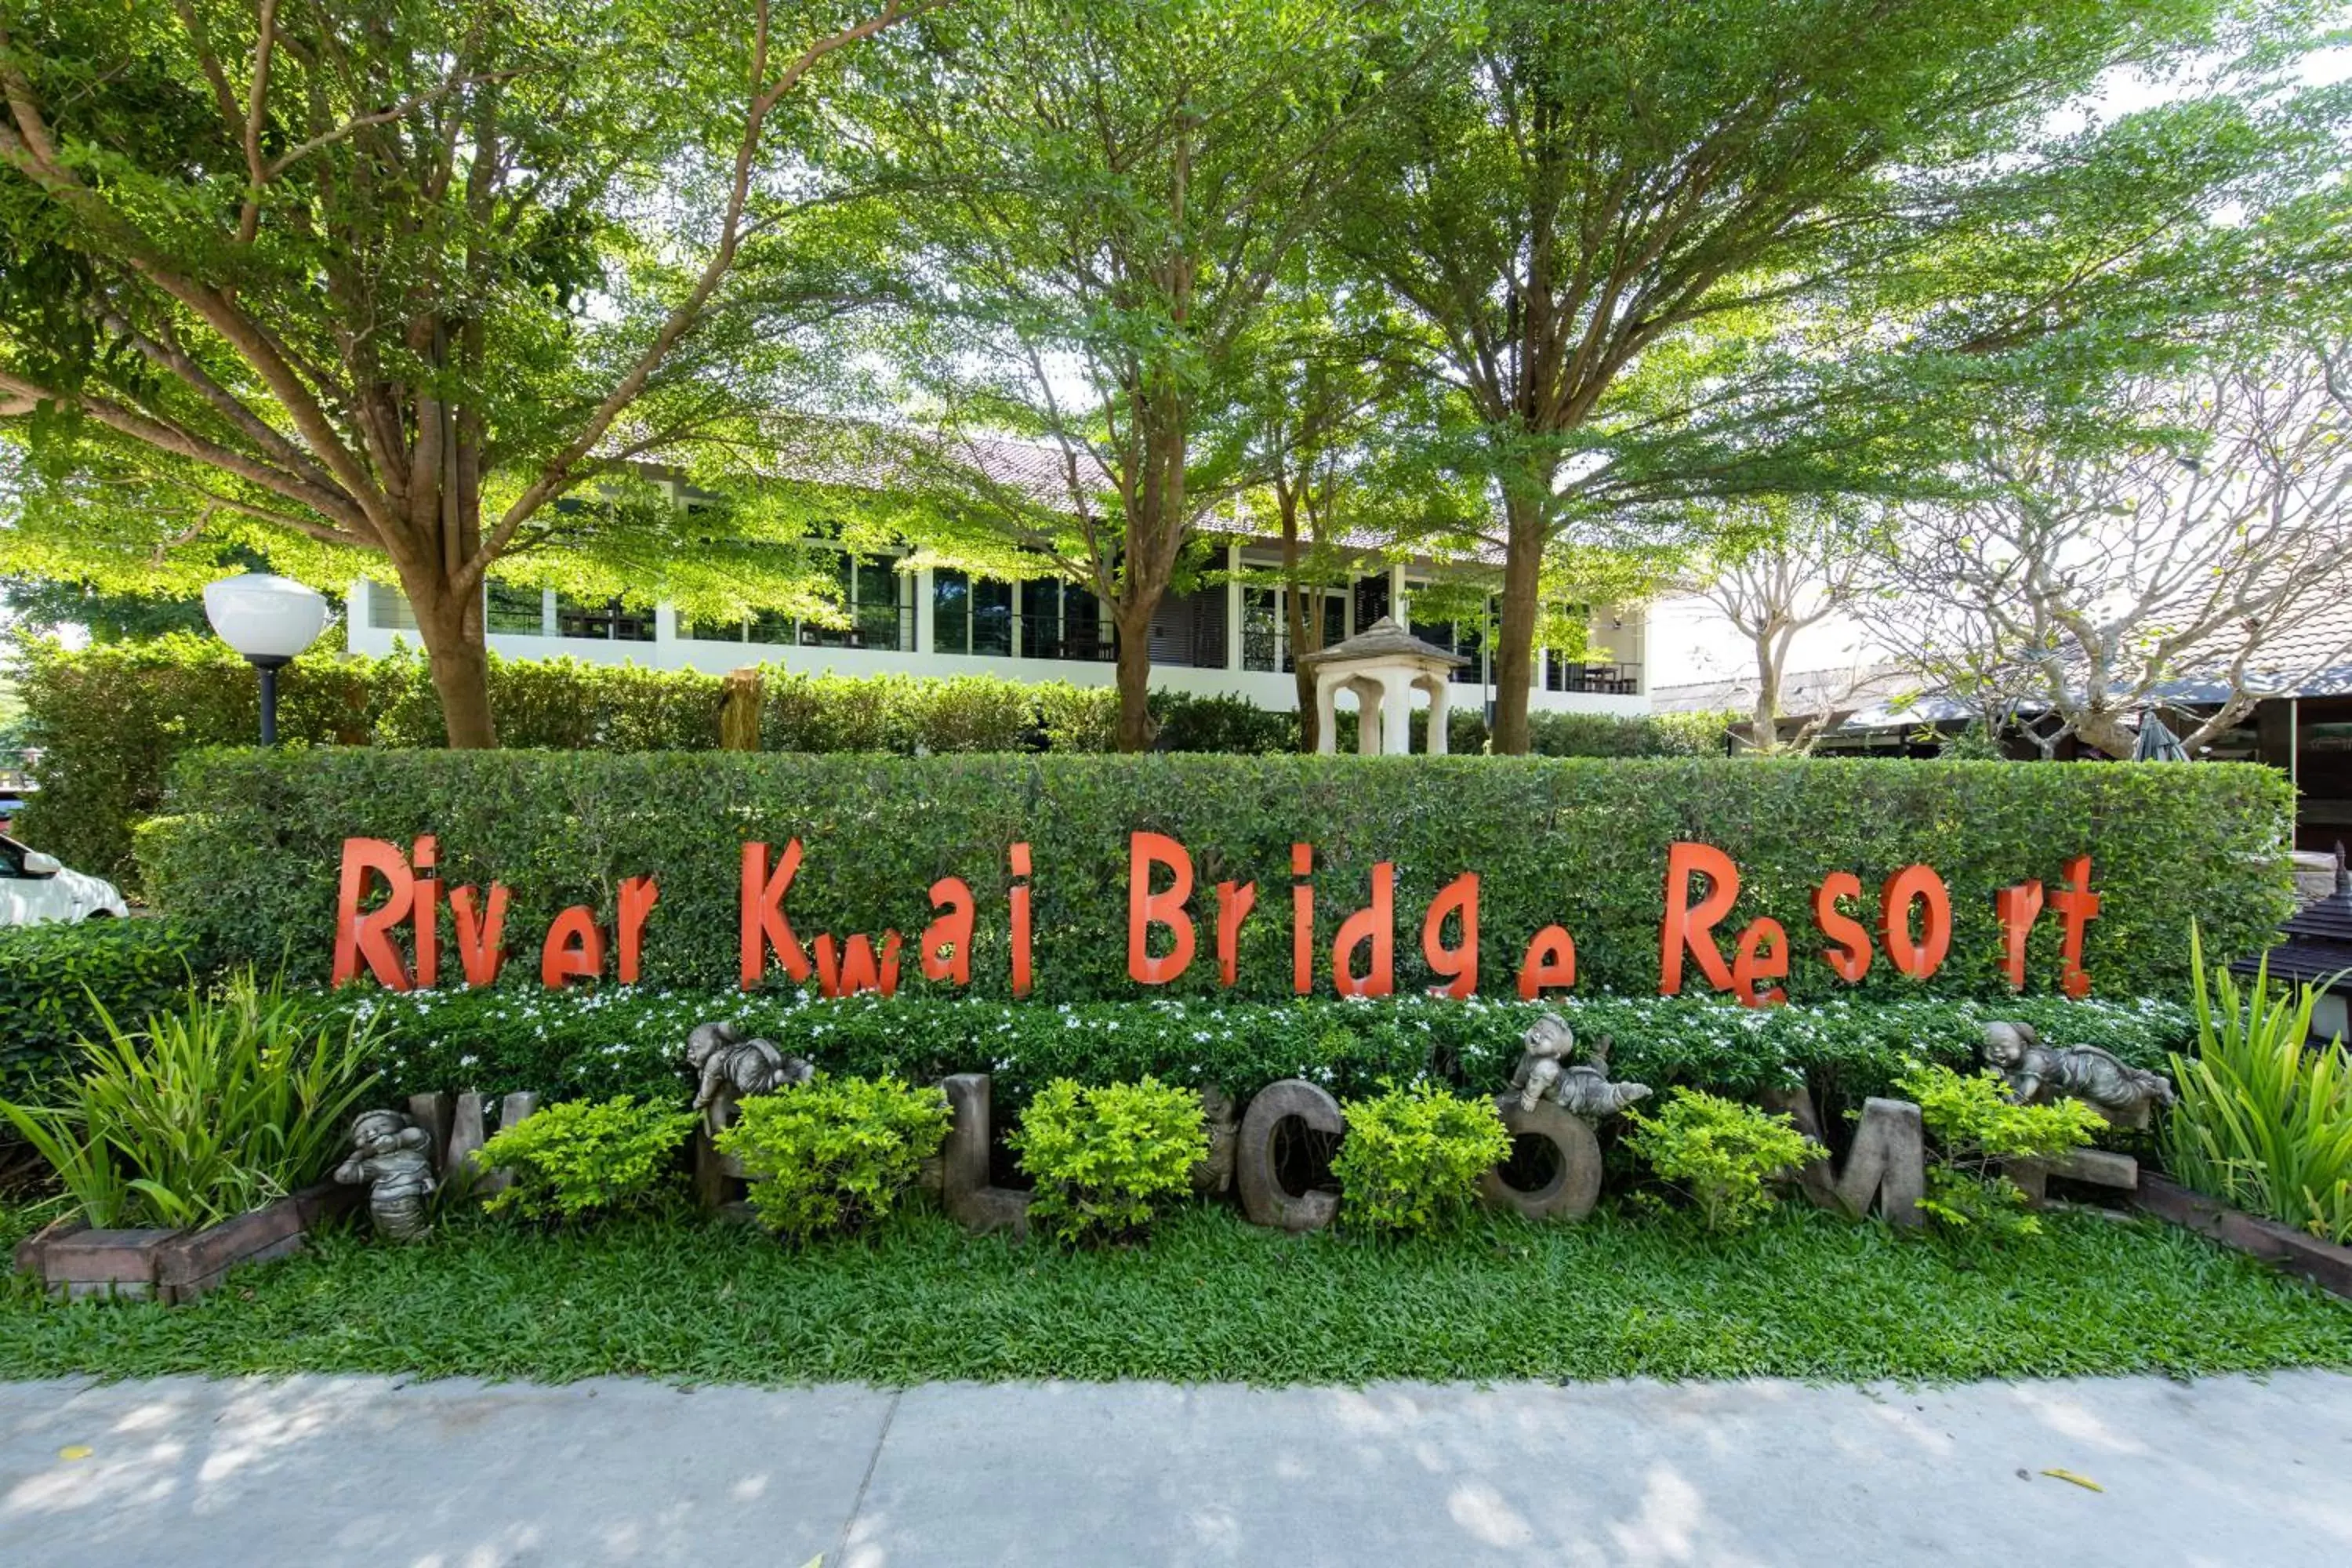 On site, Property Building in The RiverKwai Bridge Resort